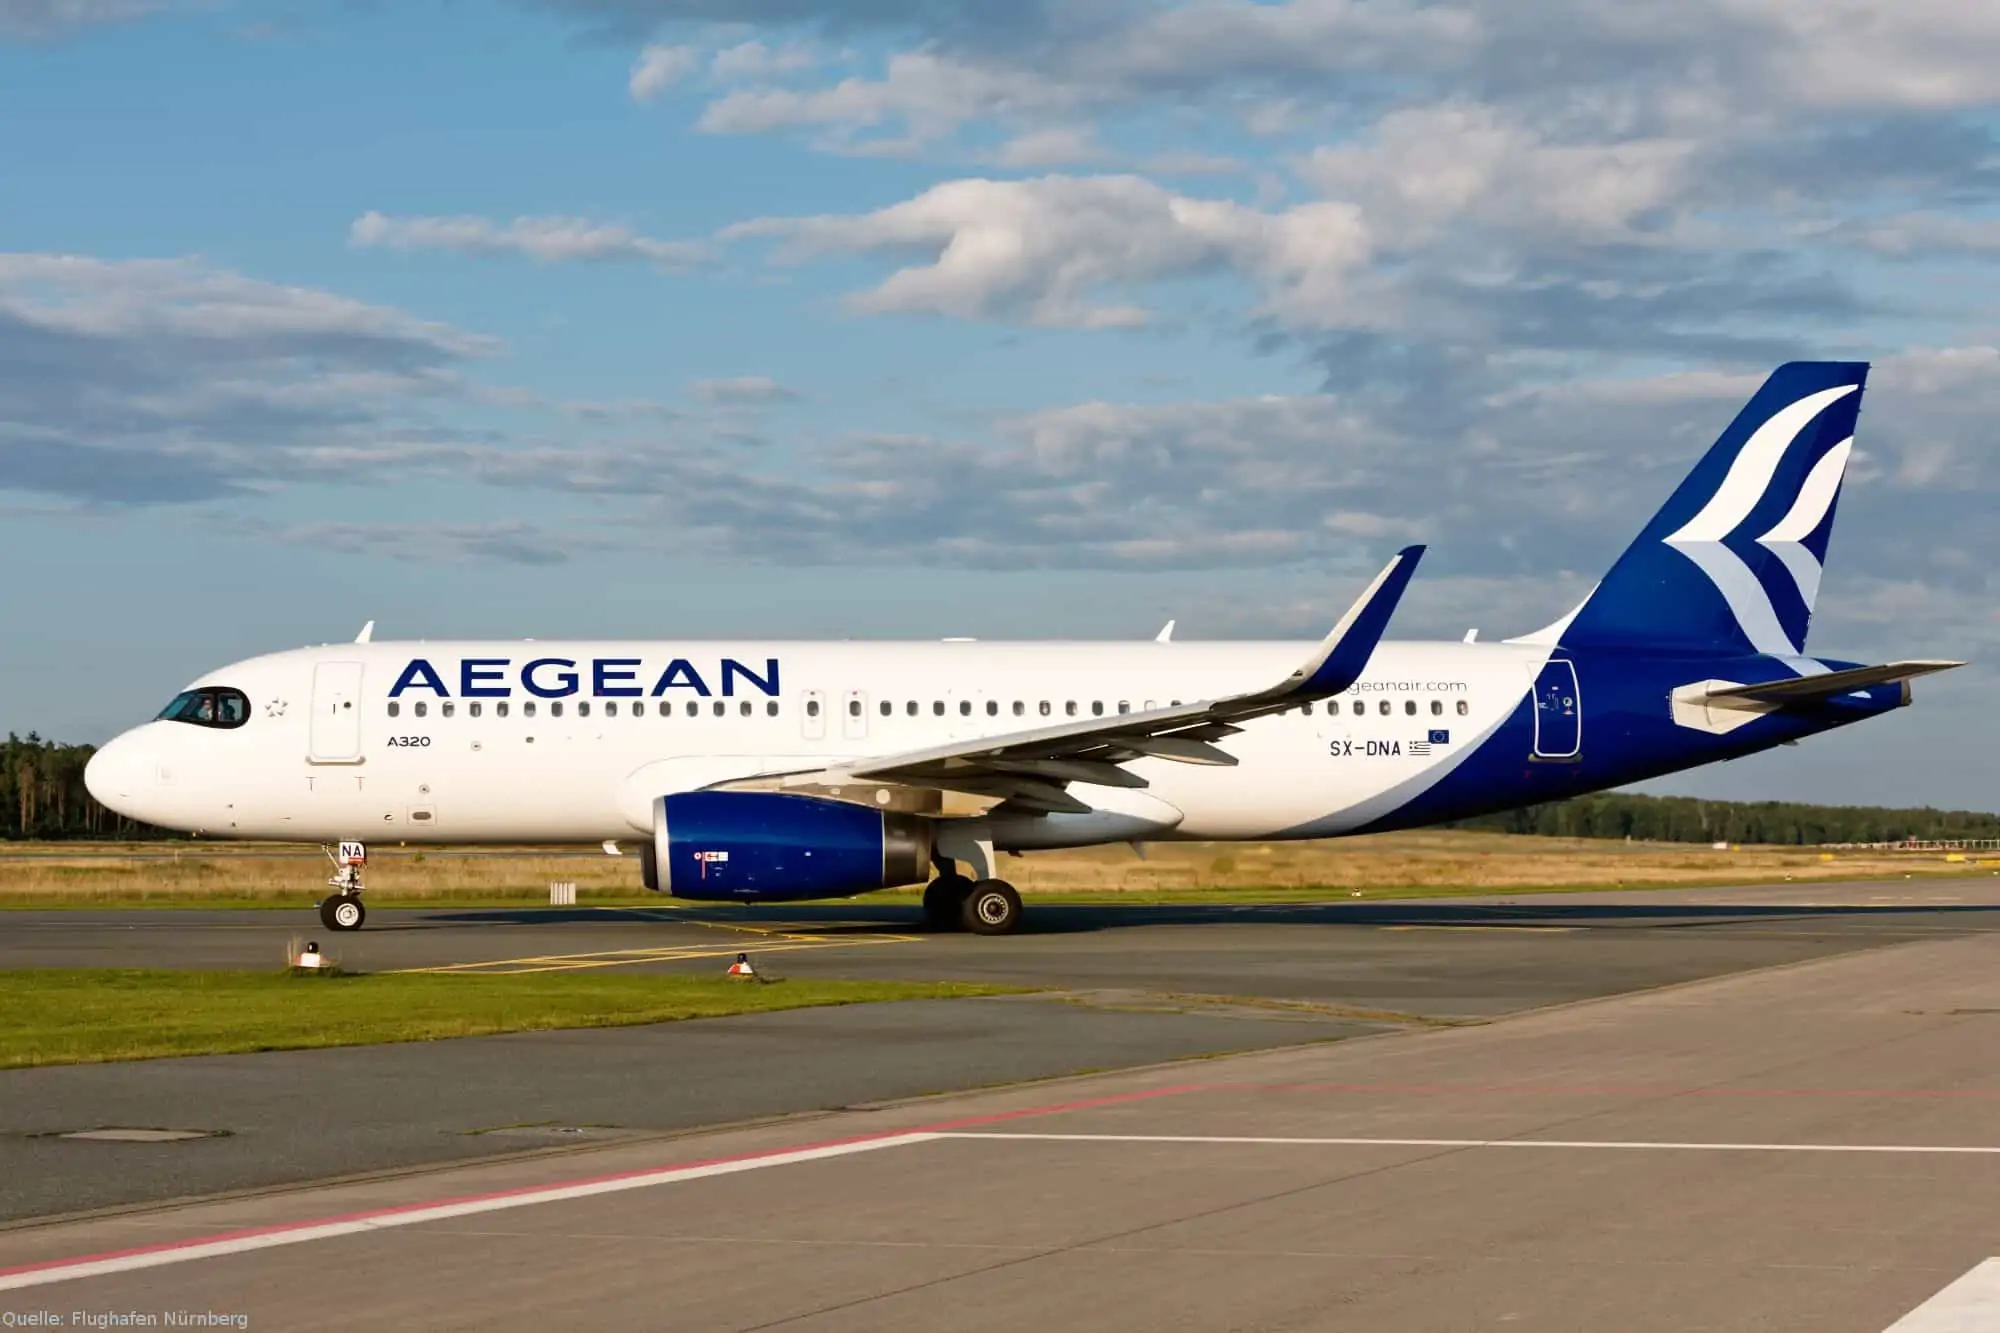 Aegean Airlines am Flughafen Nürnberg